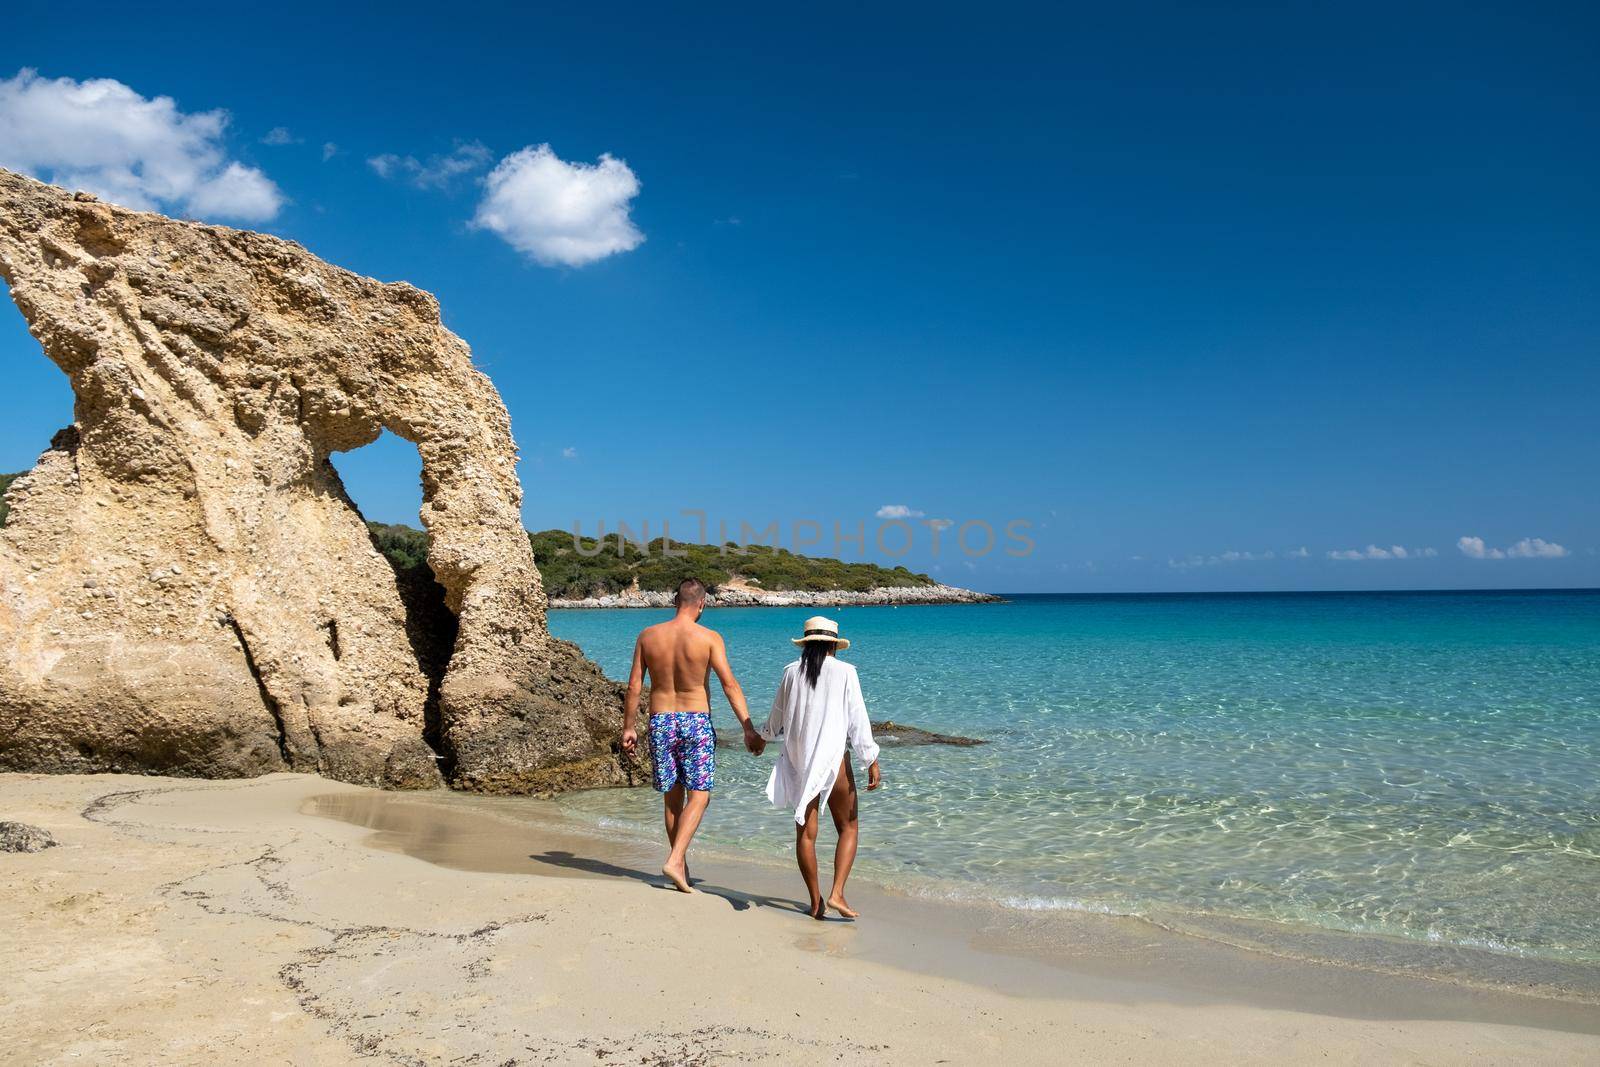 Young happy couple on seashore Crete Greece, men, and woman Voulisma beach Crete Greece. Europe